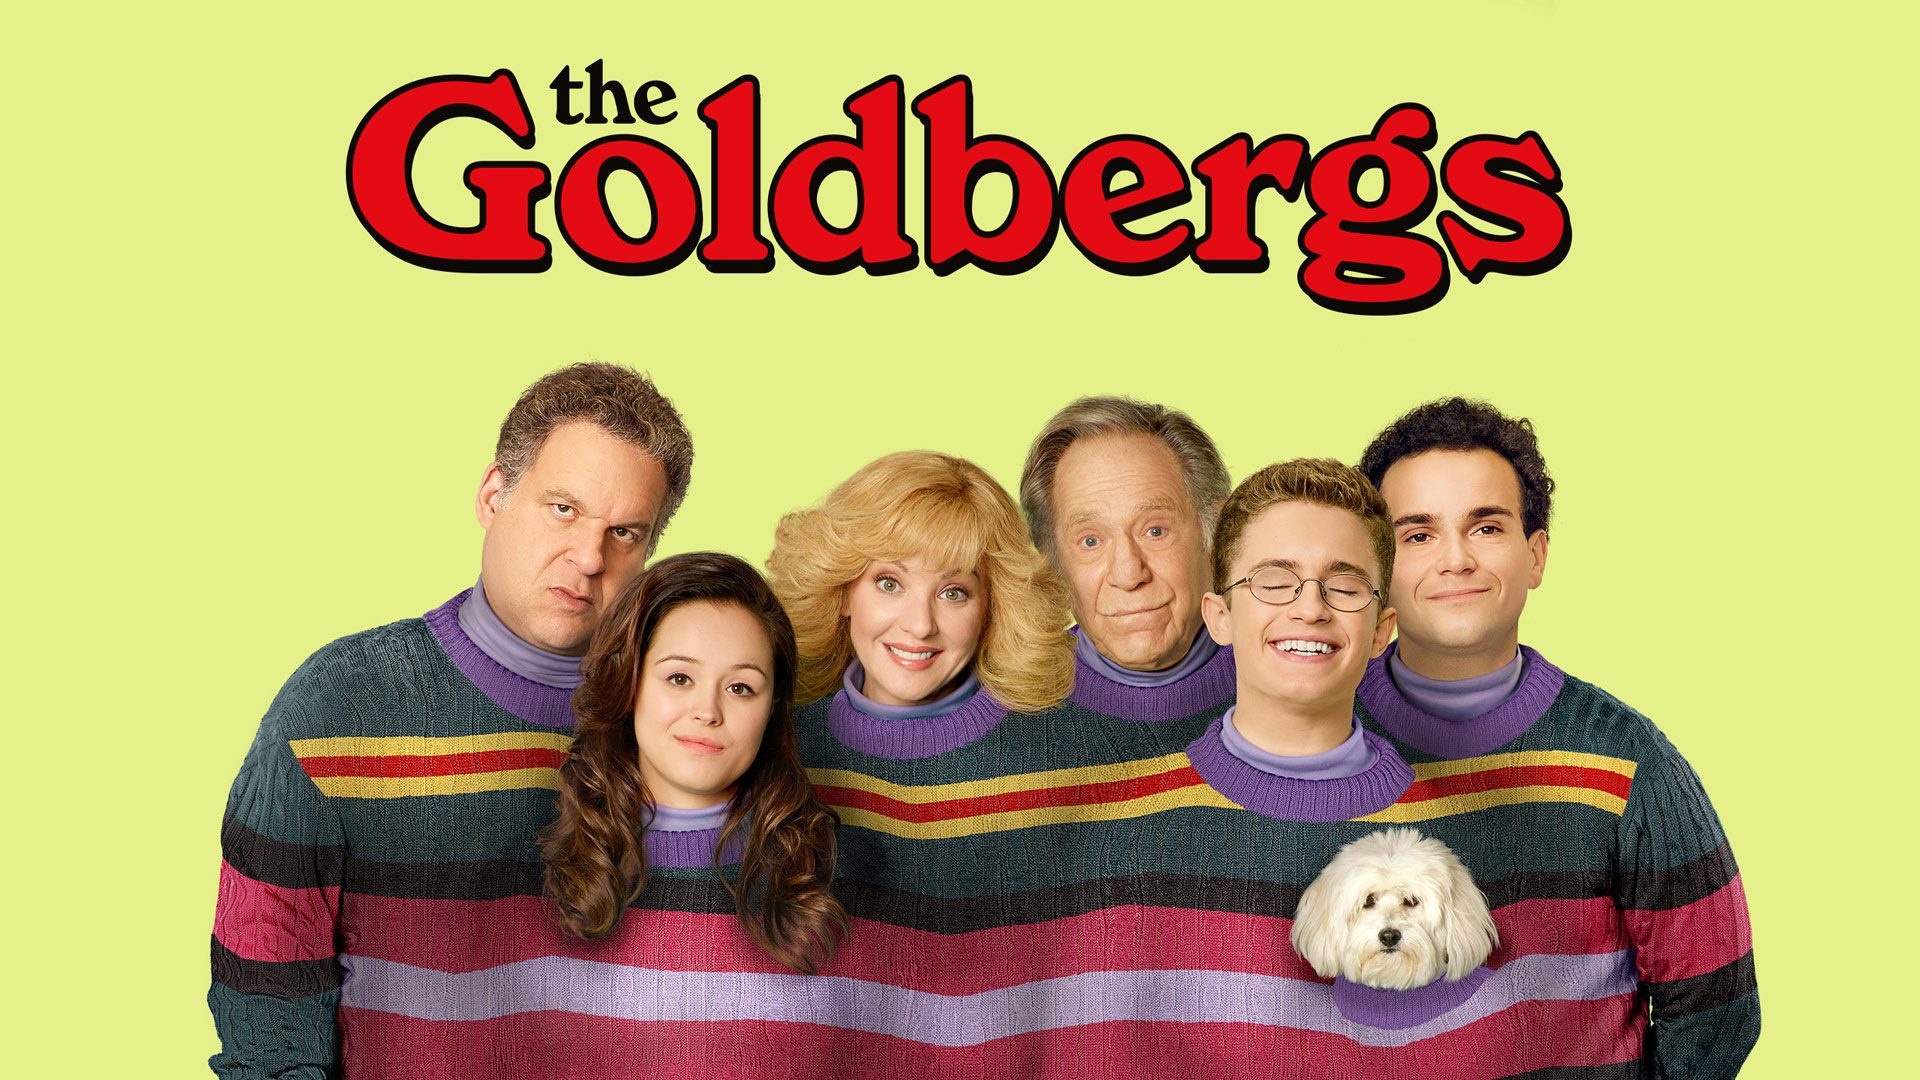 The Goldbergs, TV series, Comedy gold, 80's nostalgia, 1920x1080 Full HD Desktop